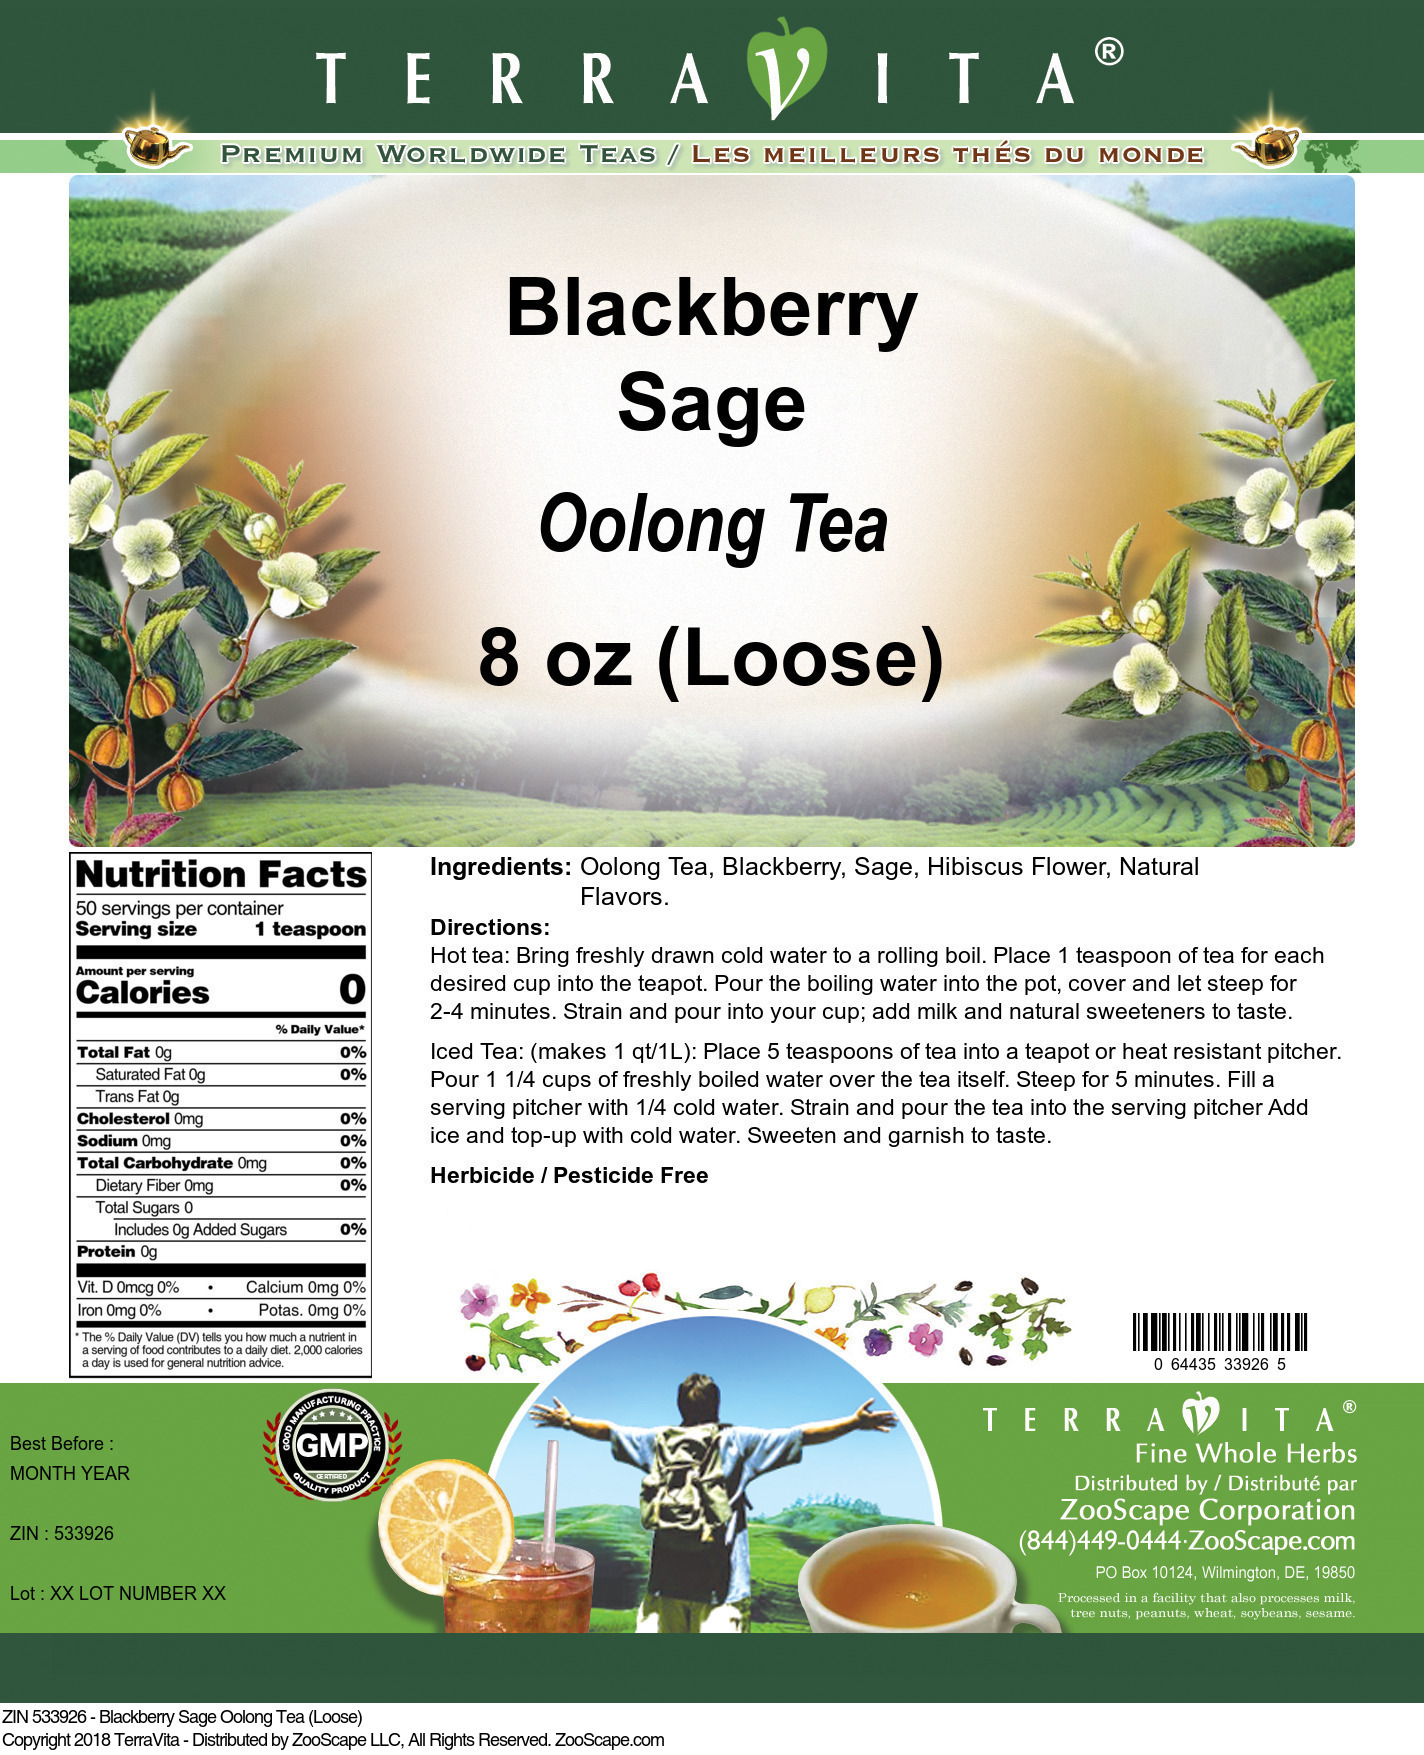 Blackberry Sage Oolong Tea (Loose) - Label